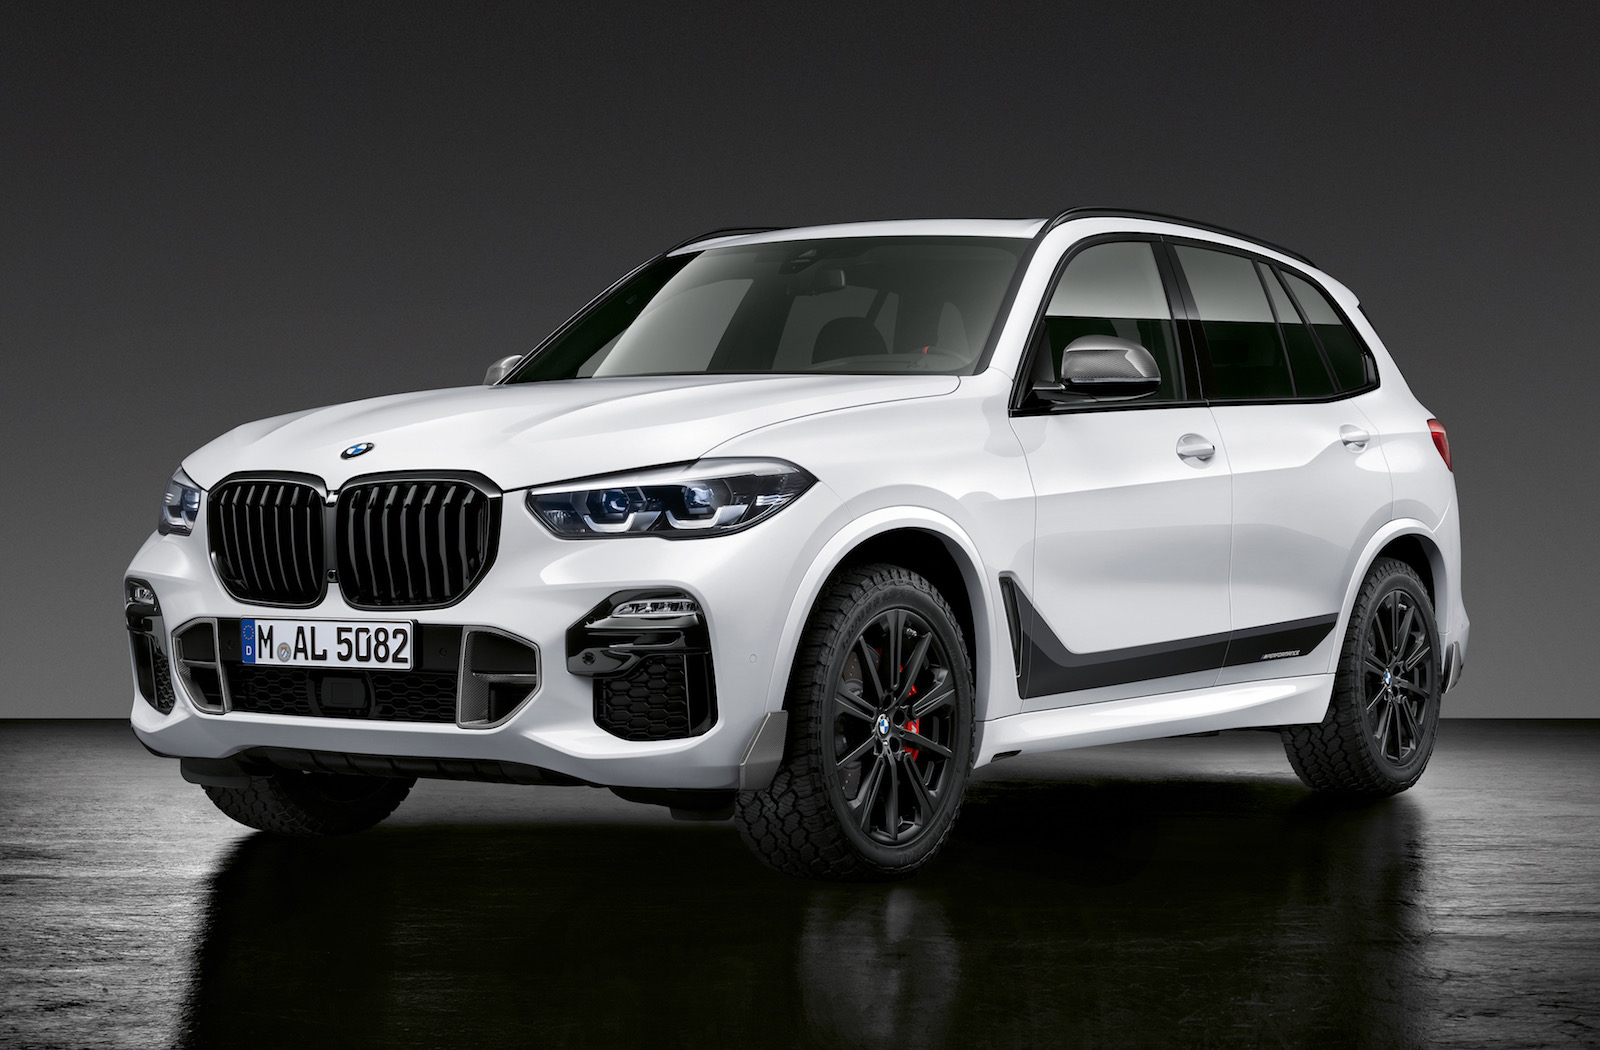 2019 BMW X5 M Performance enhancements revealed